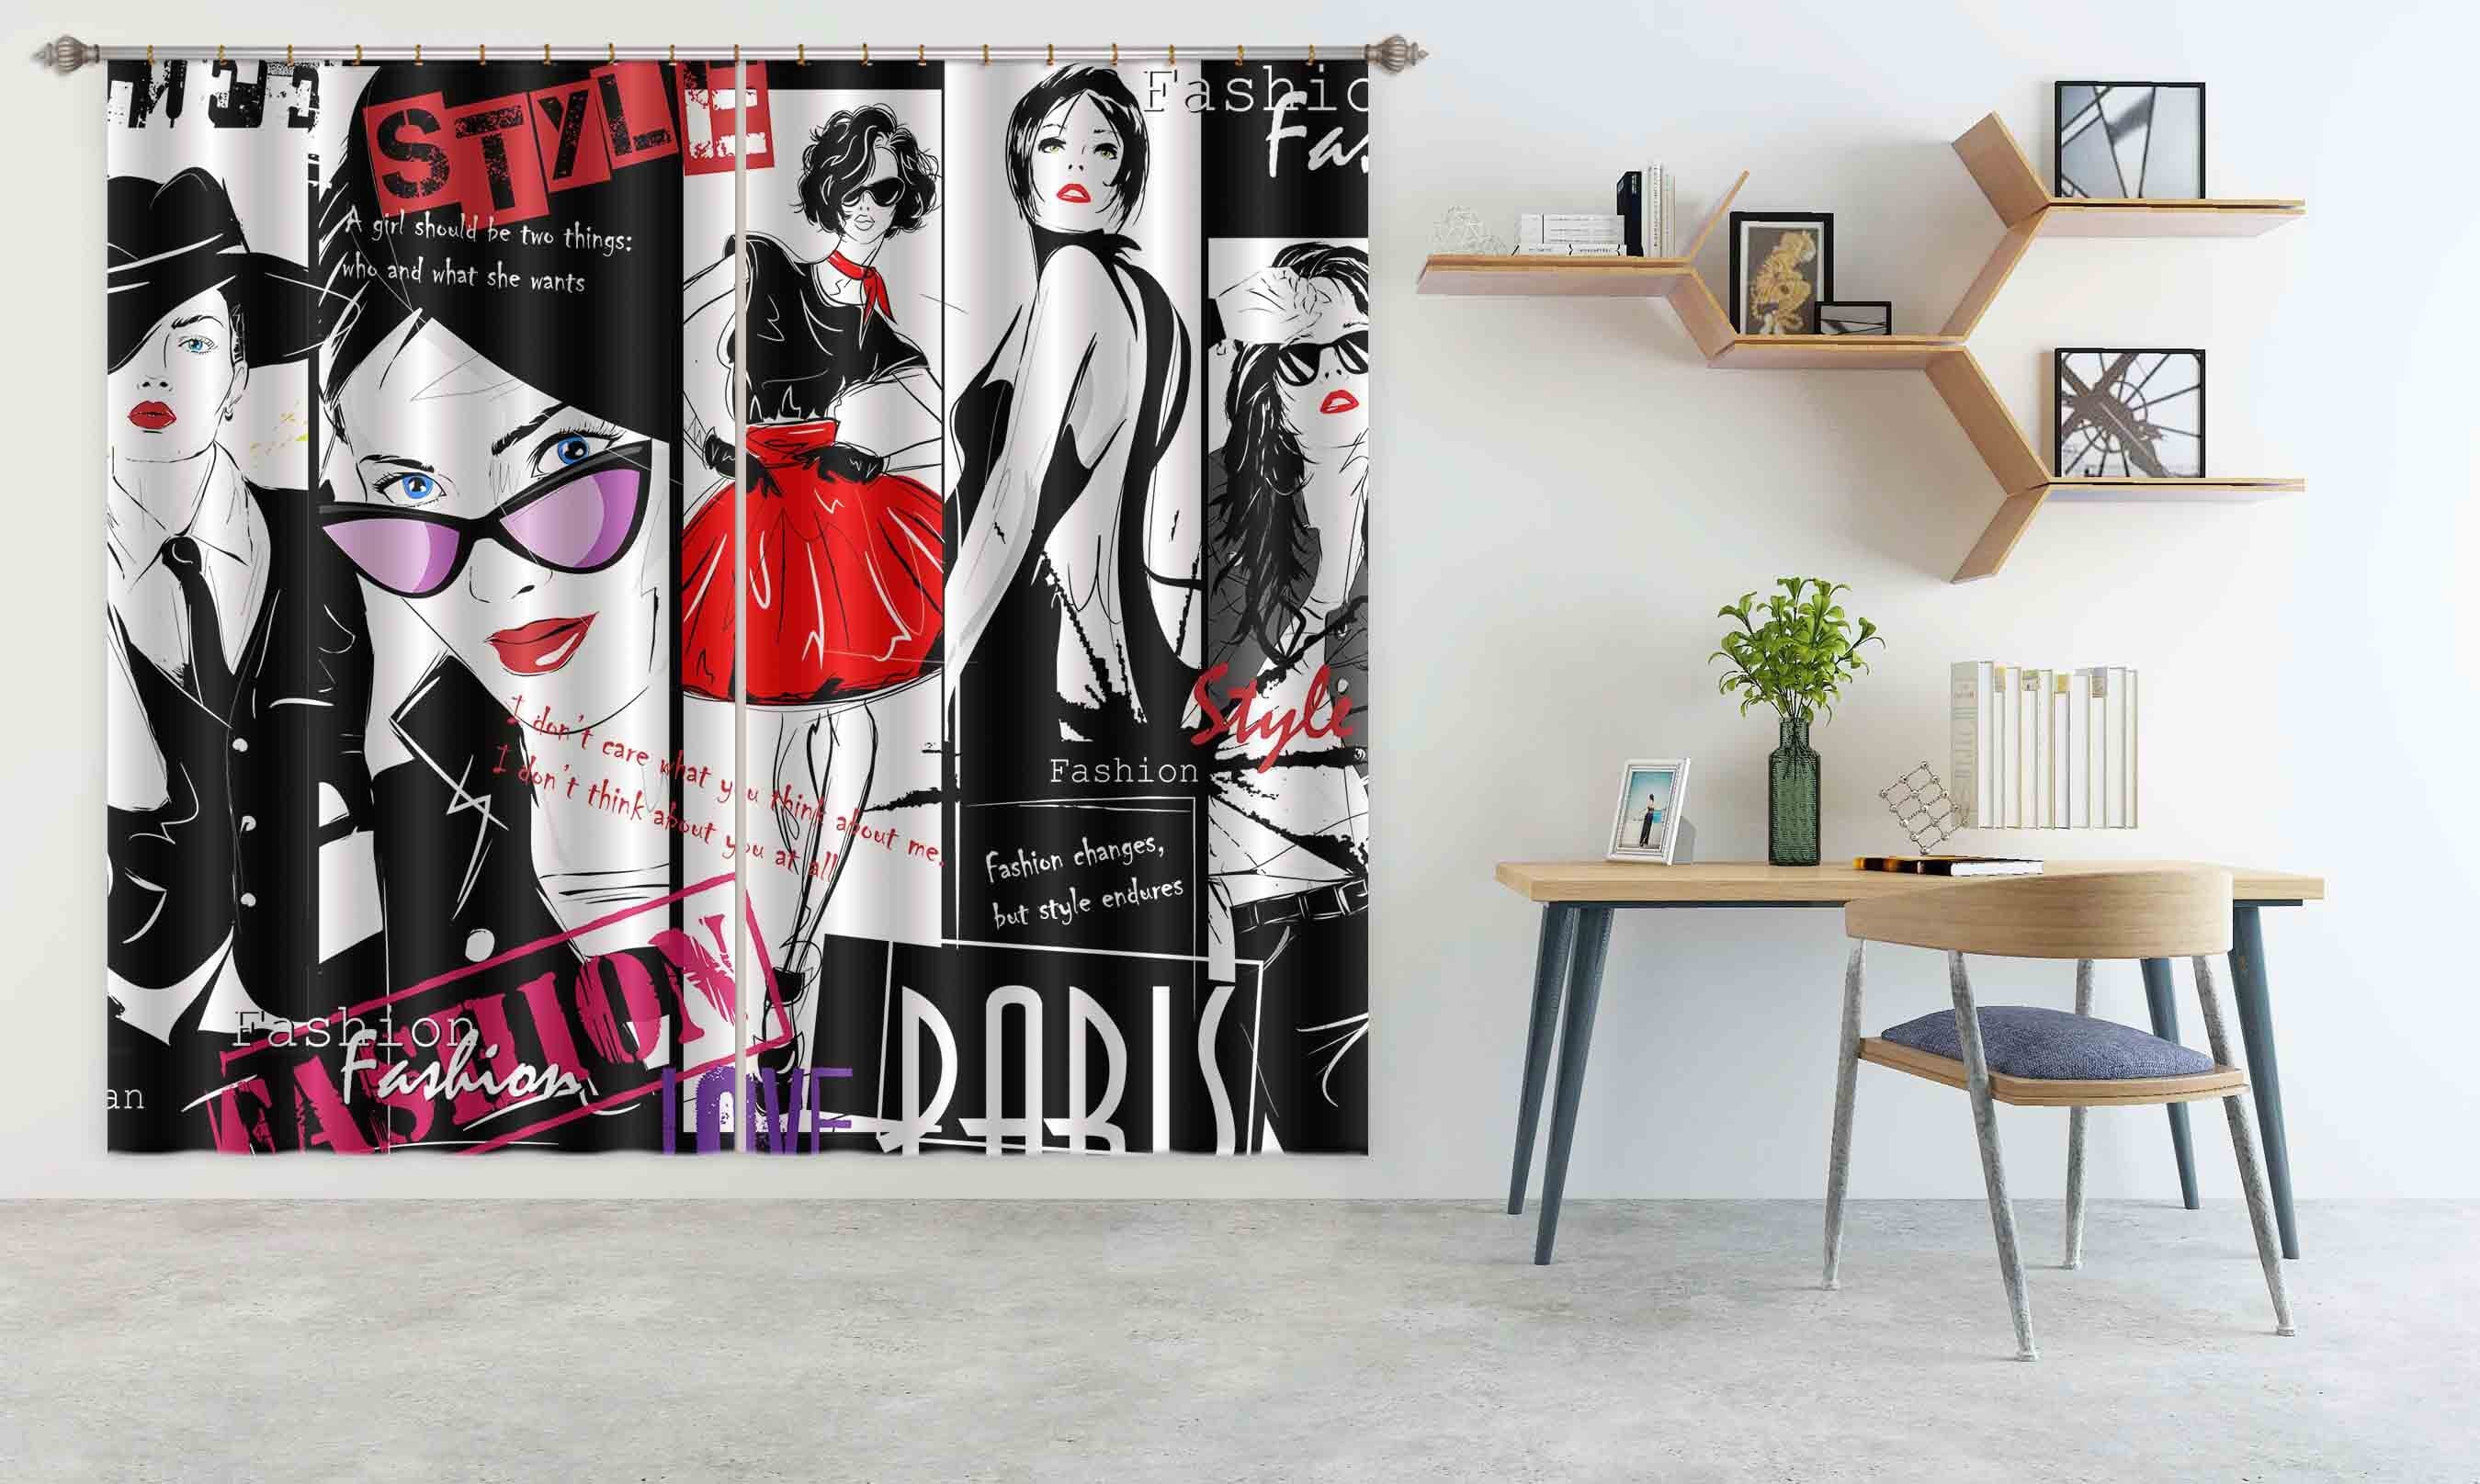 3D Fashion Girl 788 Curtains Drapes Wallpaper AJ Wallpaper 